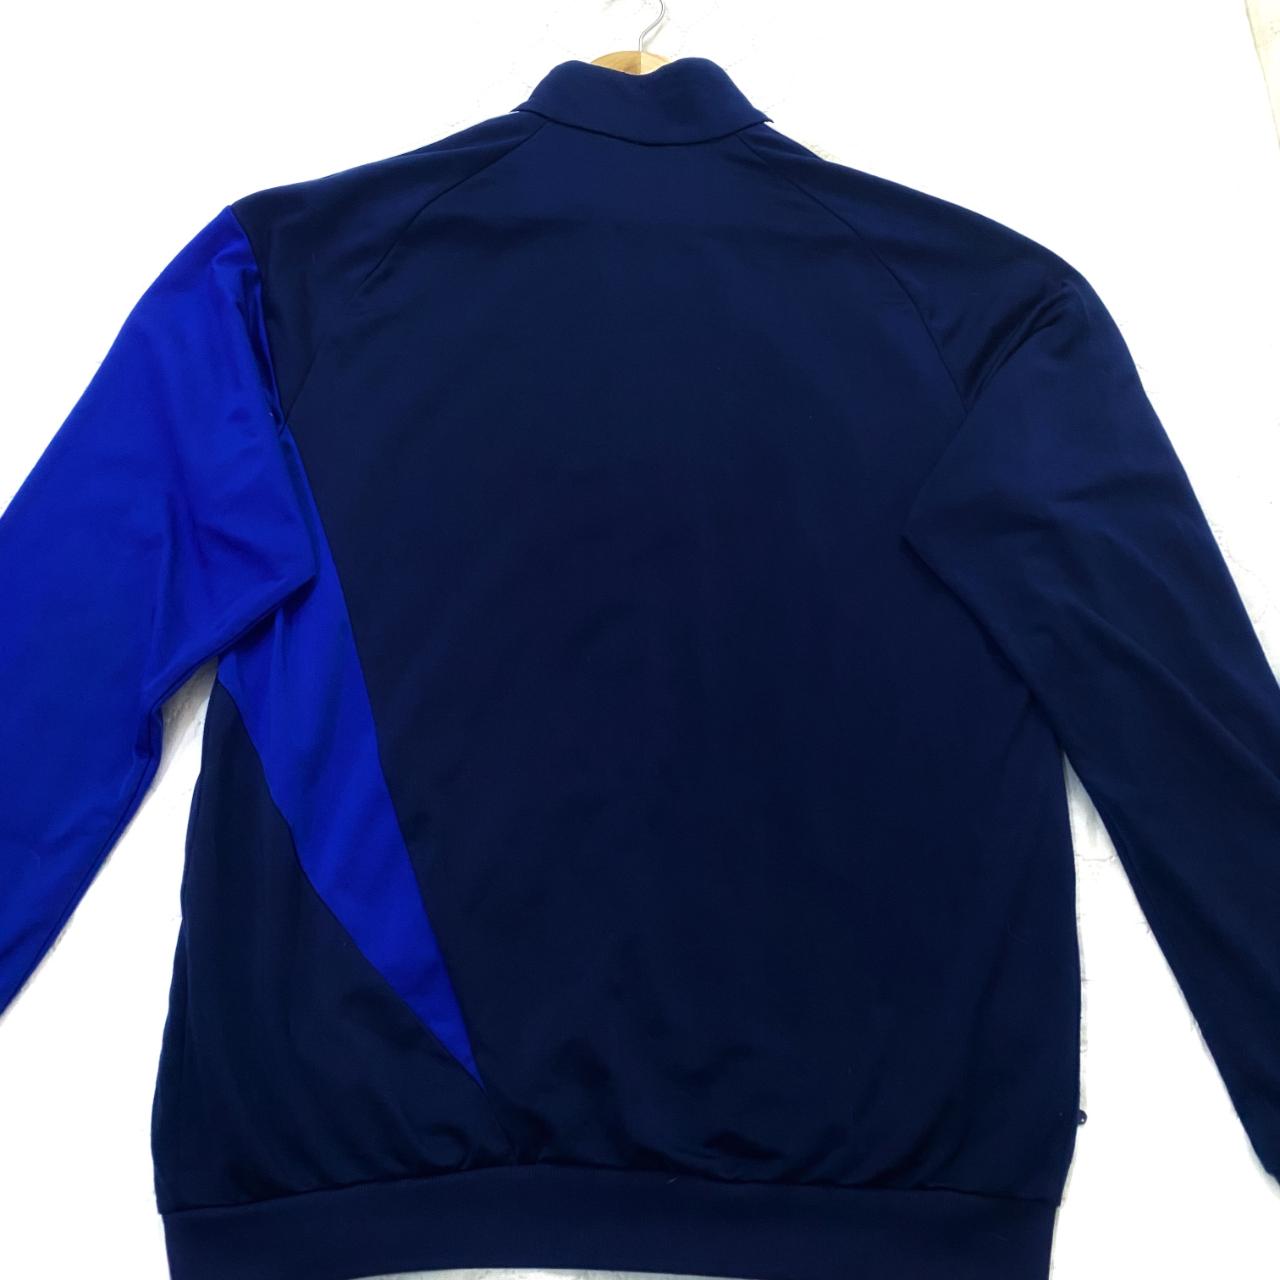 Adidas Men's Blue Jacket | Depop